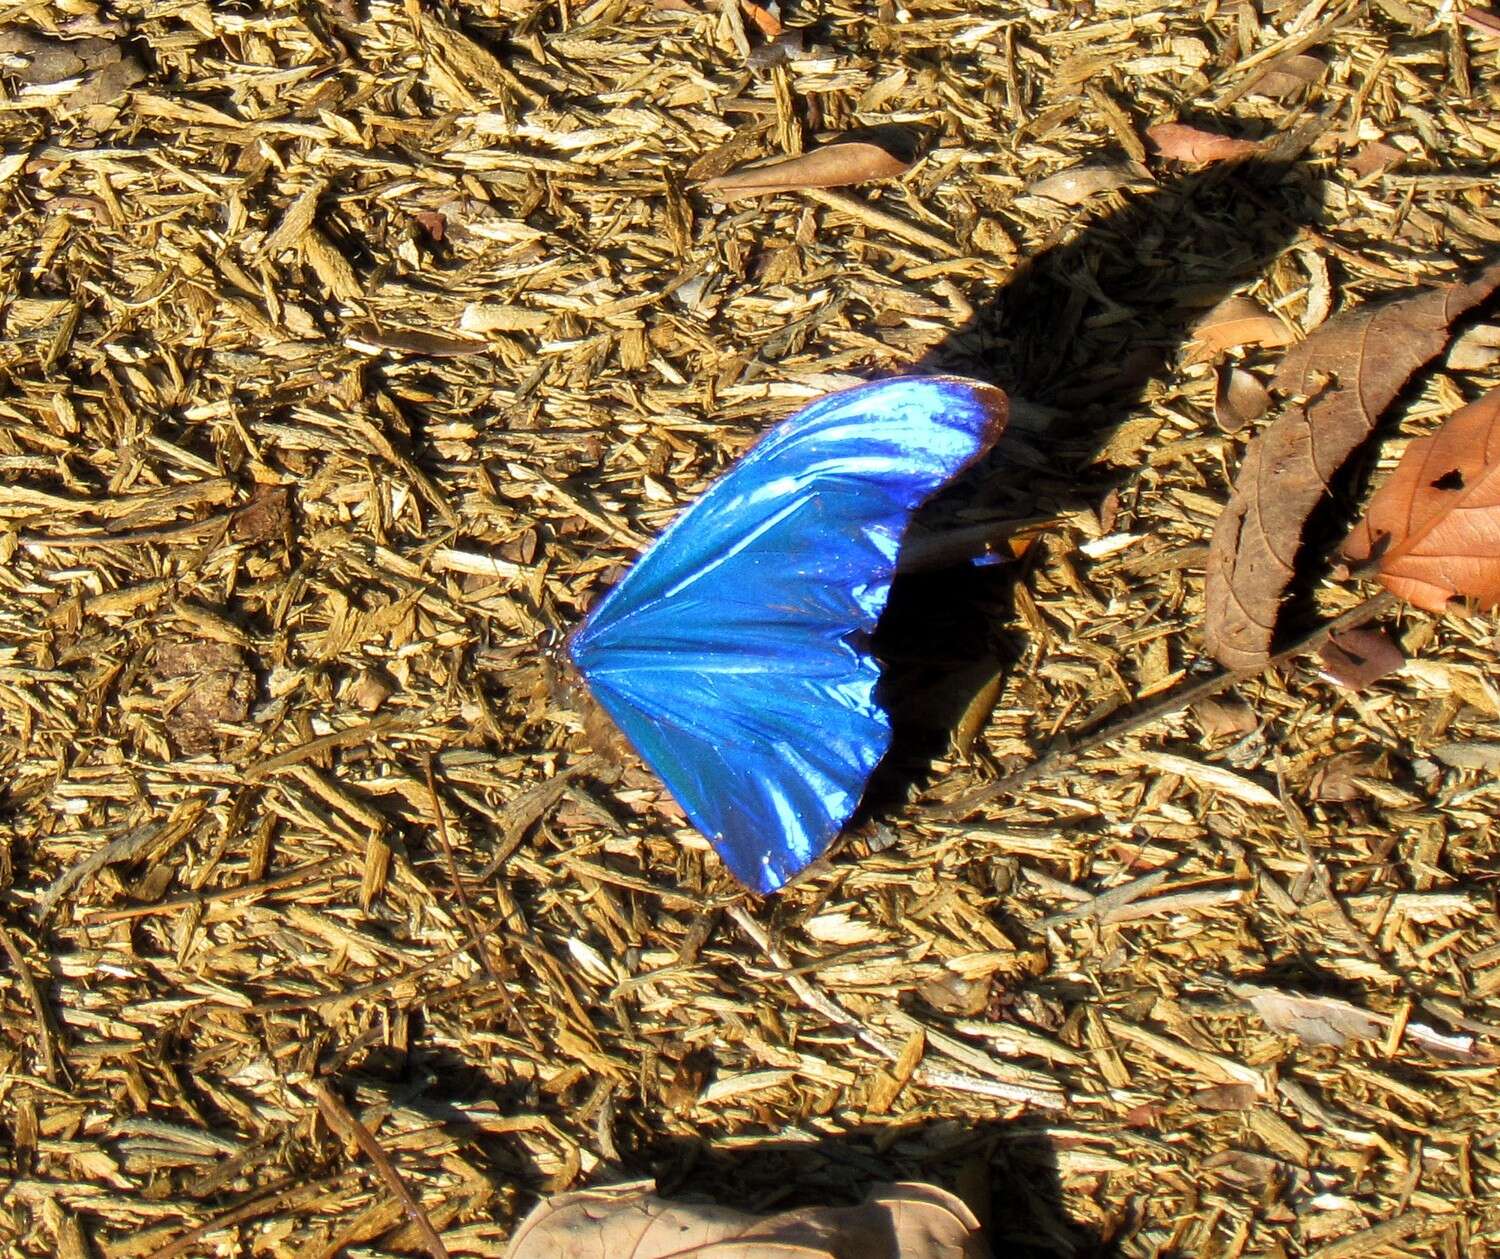 Image of Blue Morpho